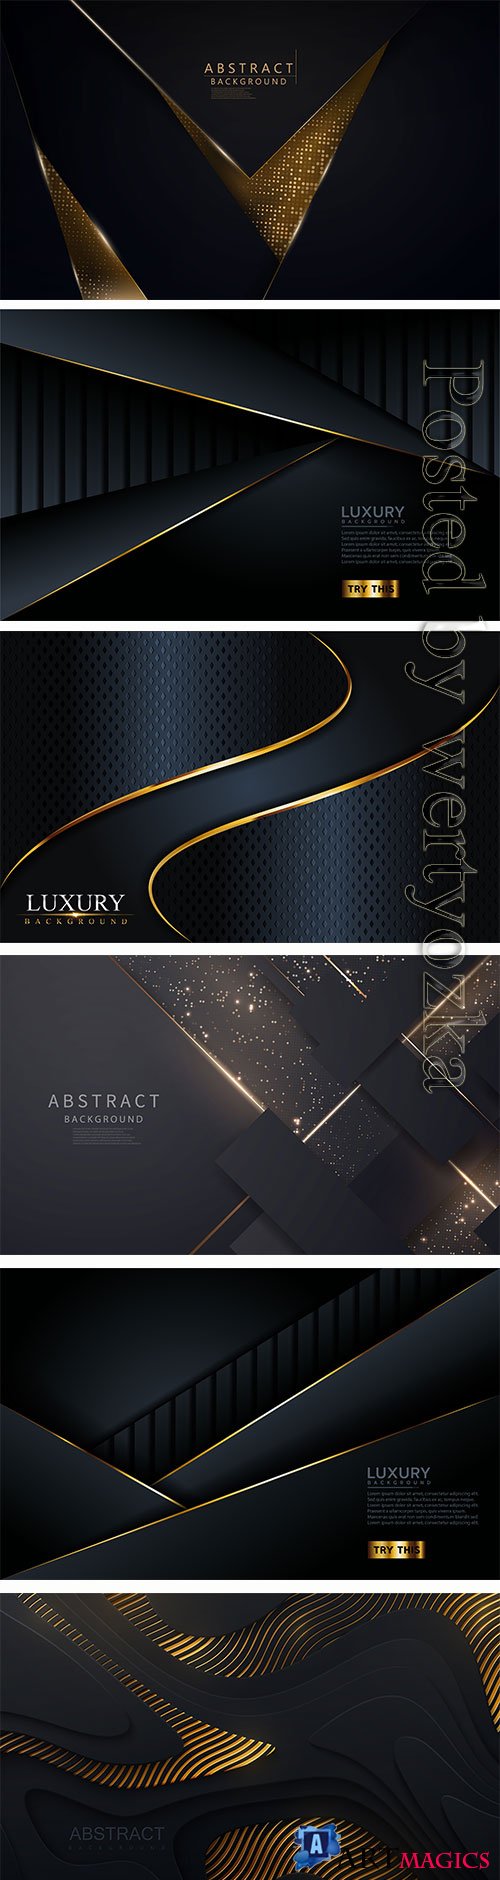 Luxury dark background with golden lines combinations